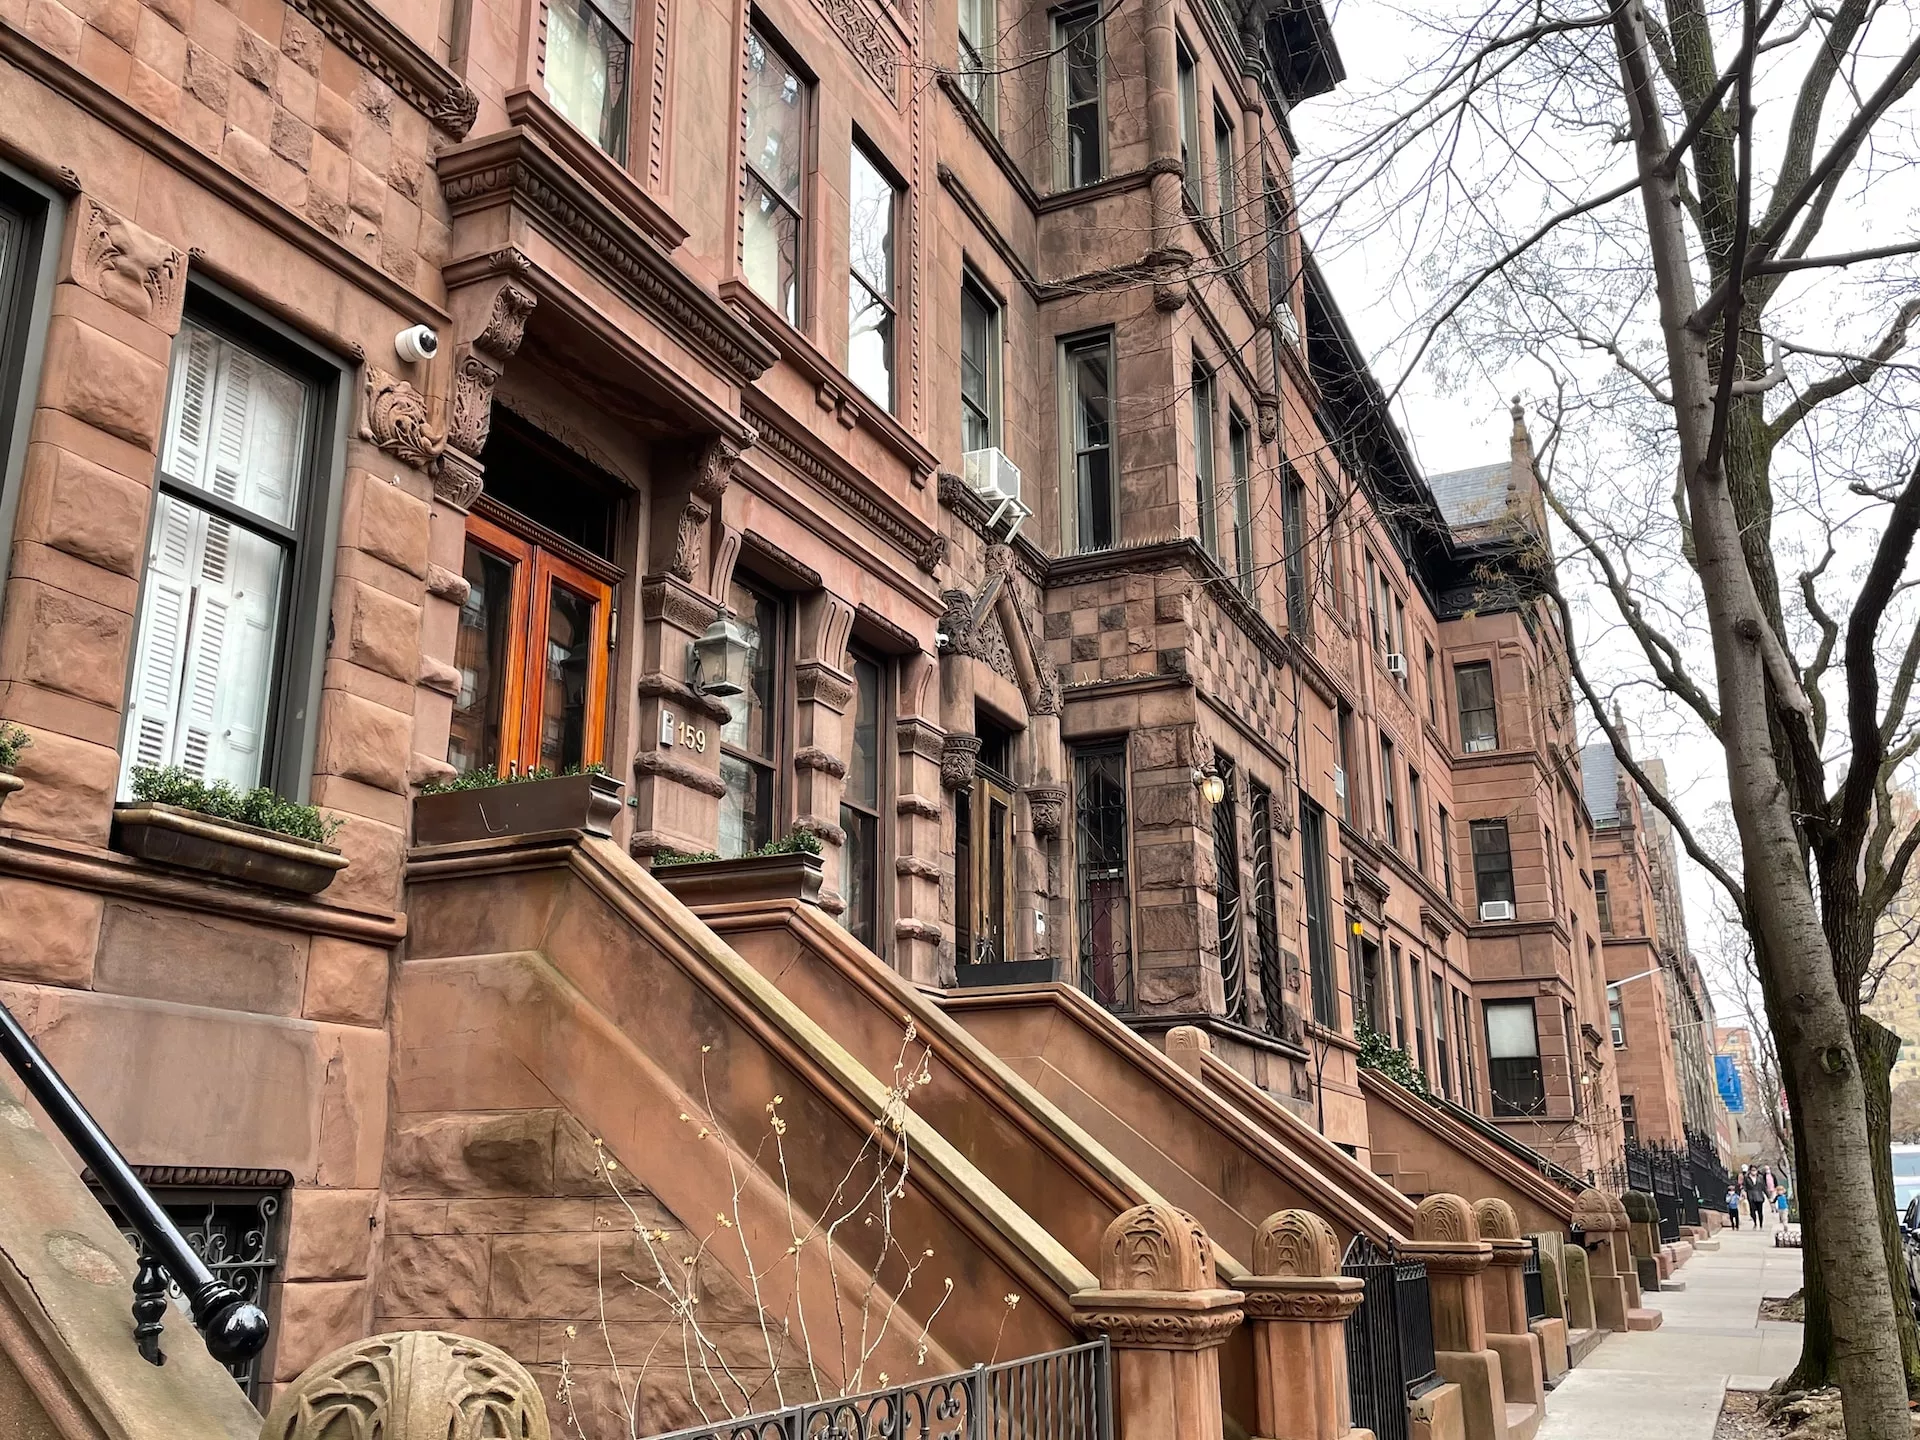 New York Apartments: Top Long-Term Rental Options